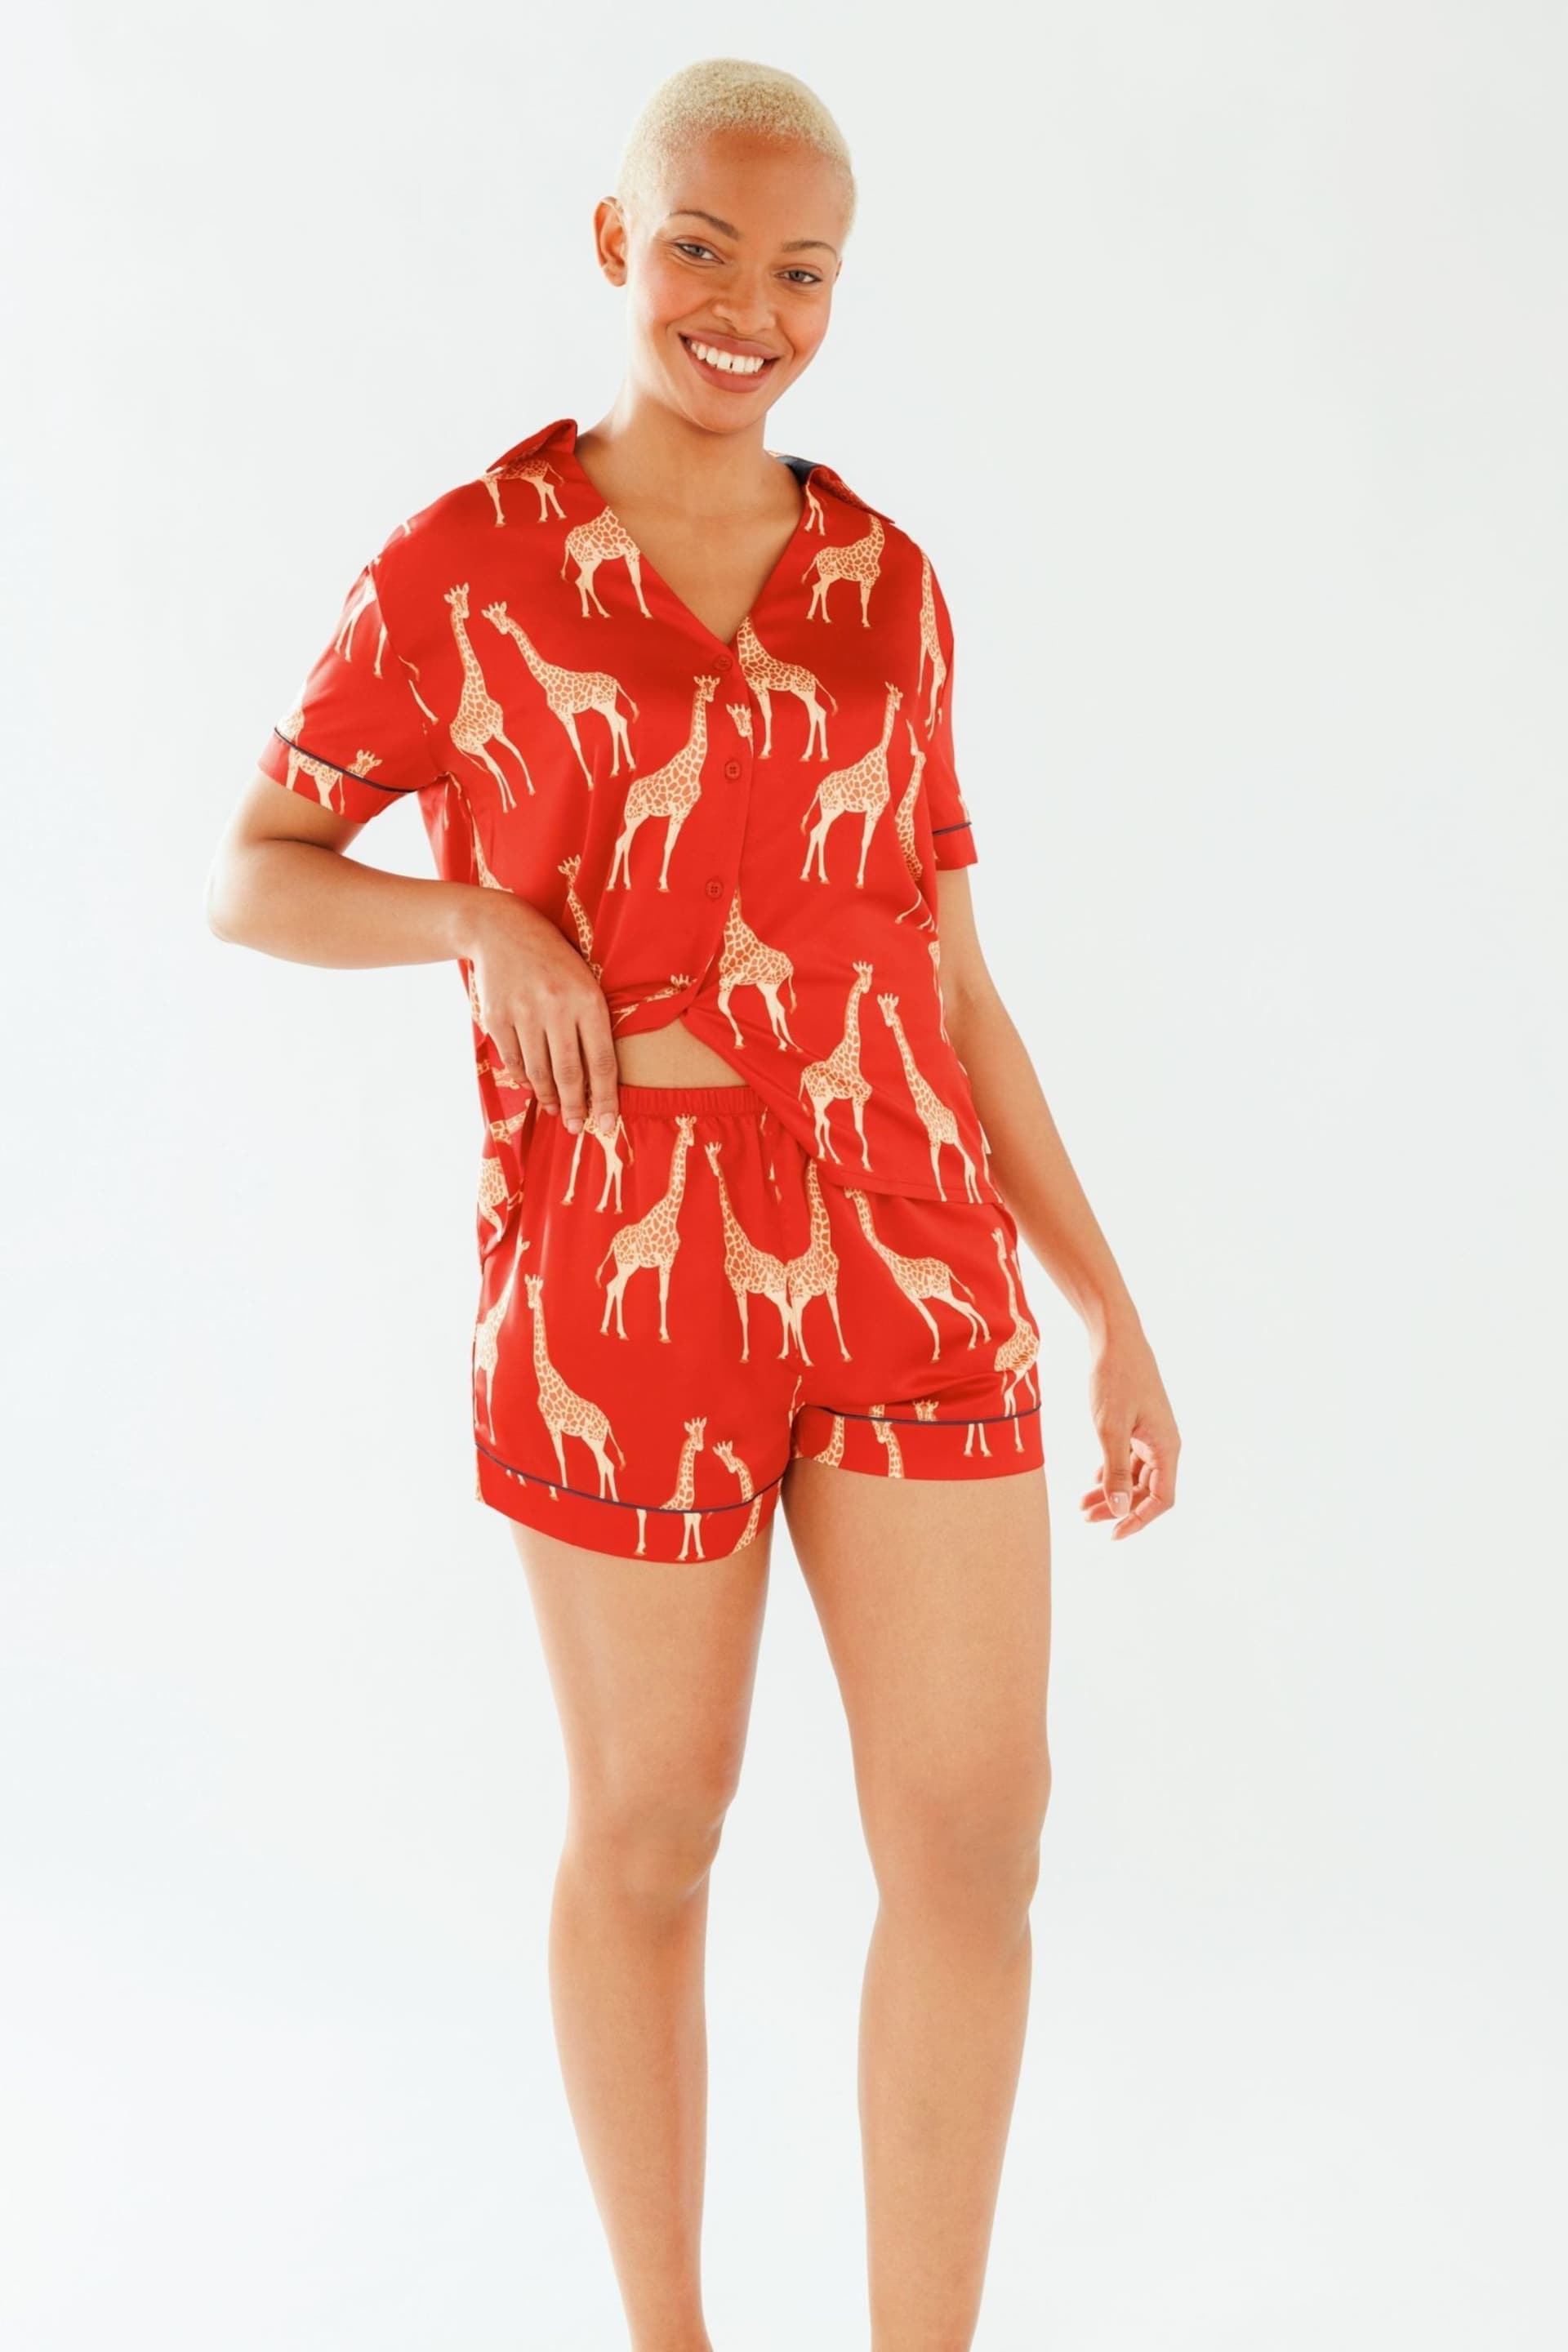 Chelsea Peers Red Satin Giraffe Print Short Pyjama Set - Image 3 of 5